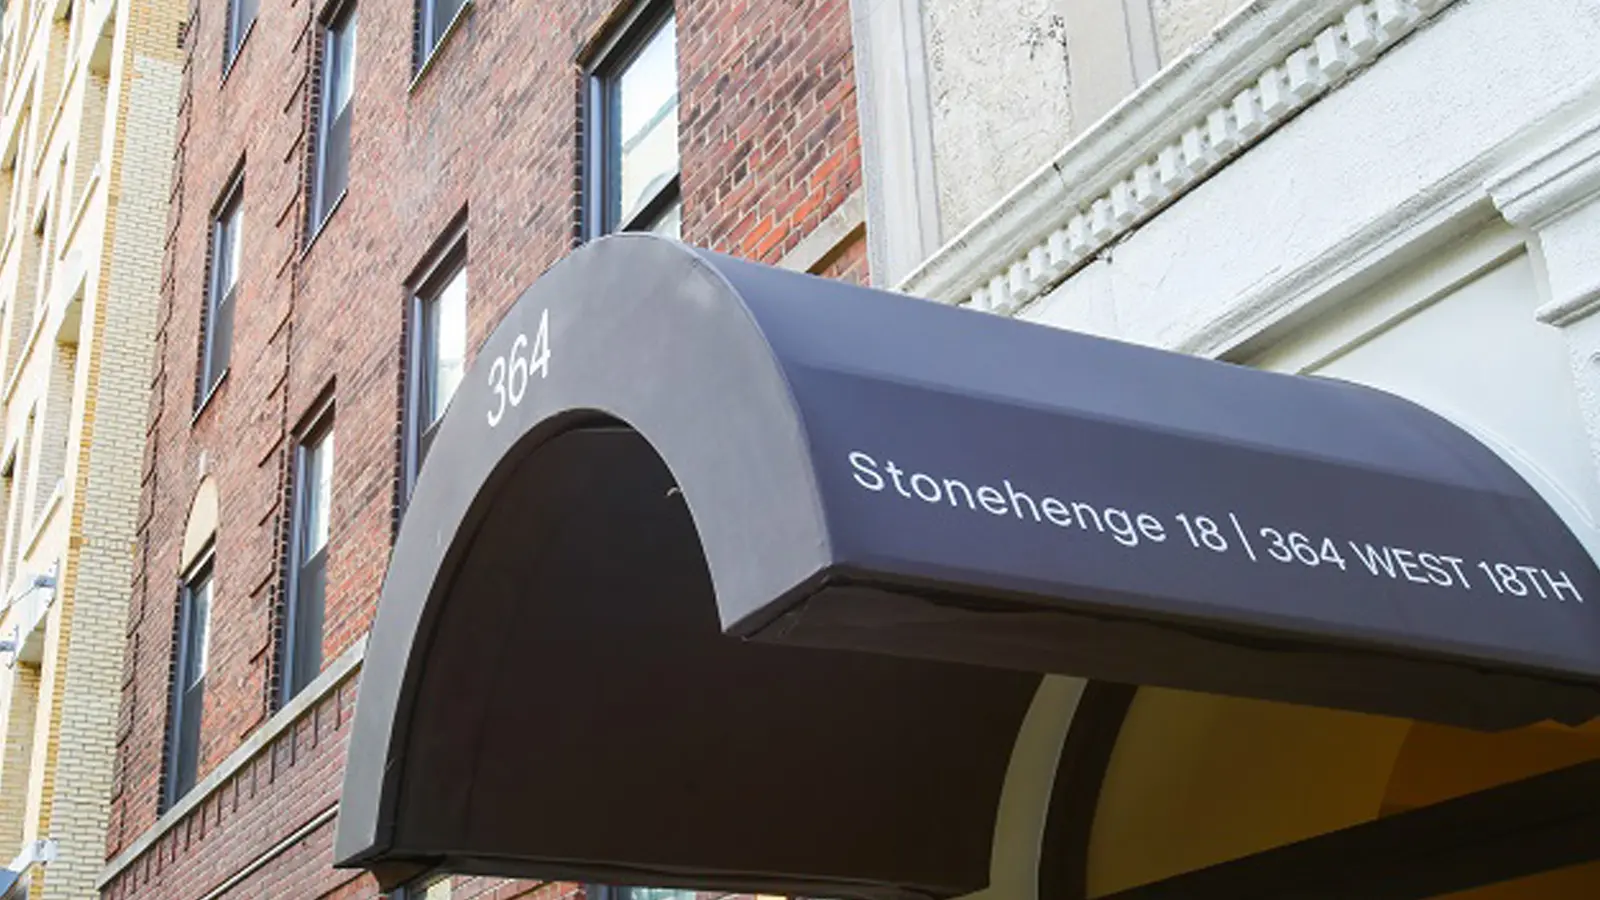 Stonehenge 18, 364 West 18th Street